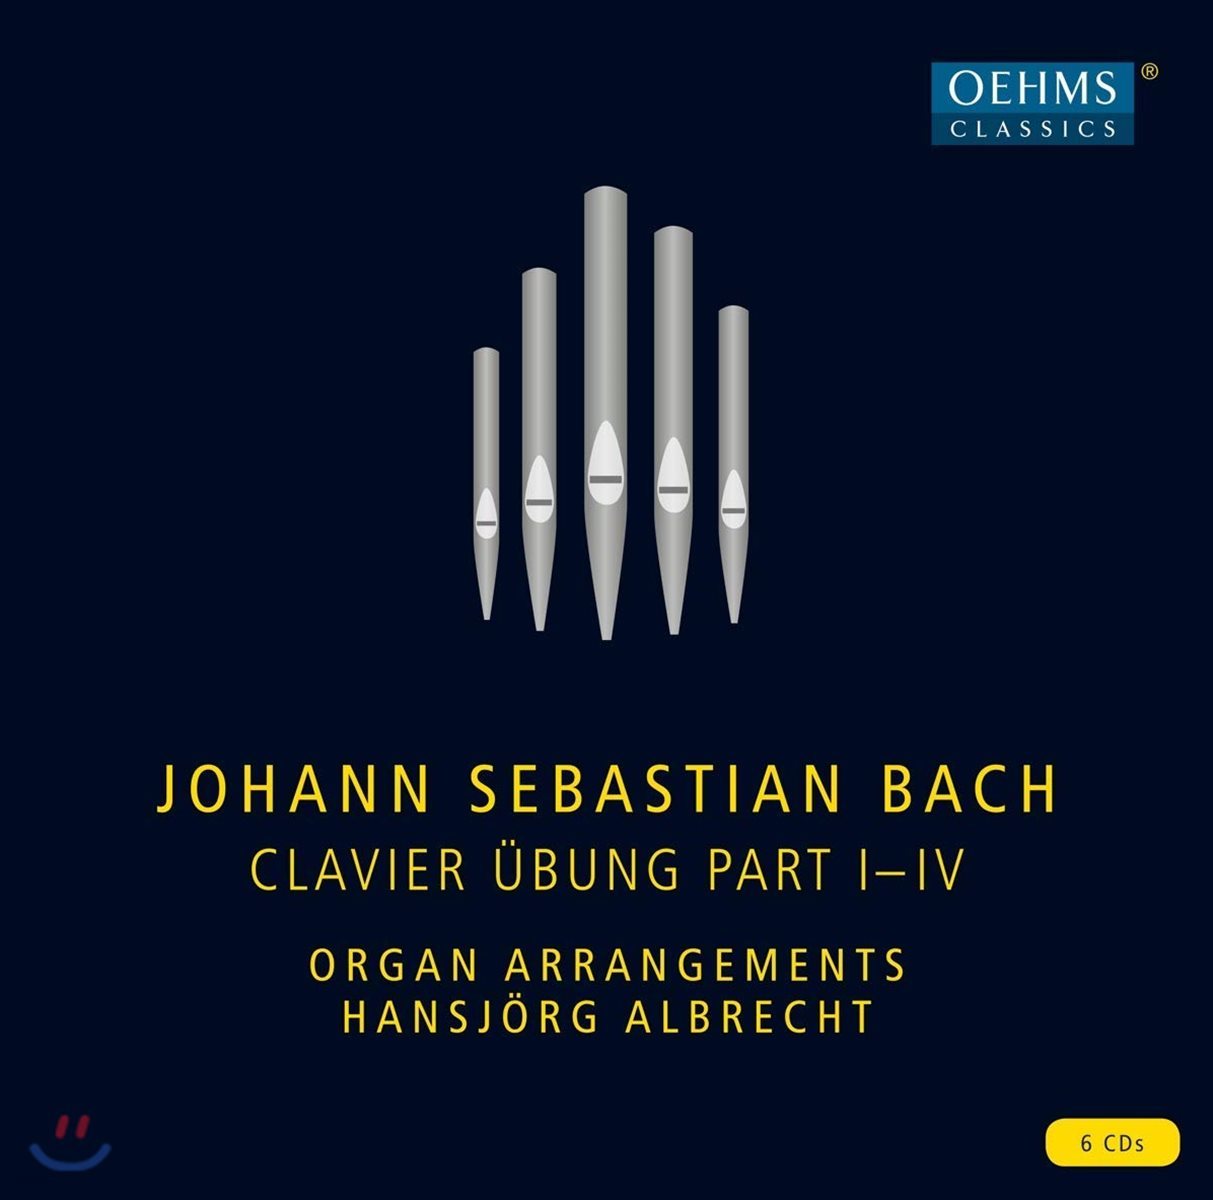 Hansjorg Albrecht J.S. 바흐: 클라비어 연습곡집 [오르간 편곡버전] (JS Bach: Clavier Ubung Part I-IV) 한스요르그 알브레히트 [6CD Boxset]